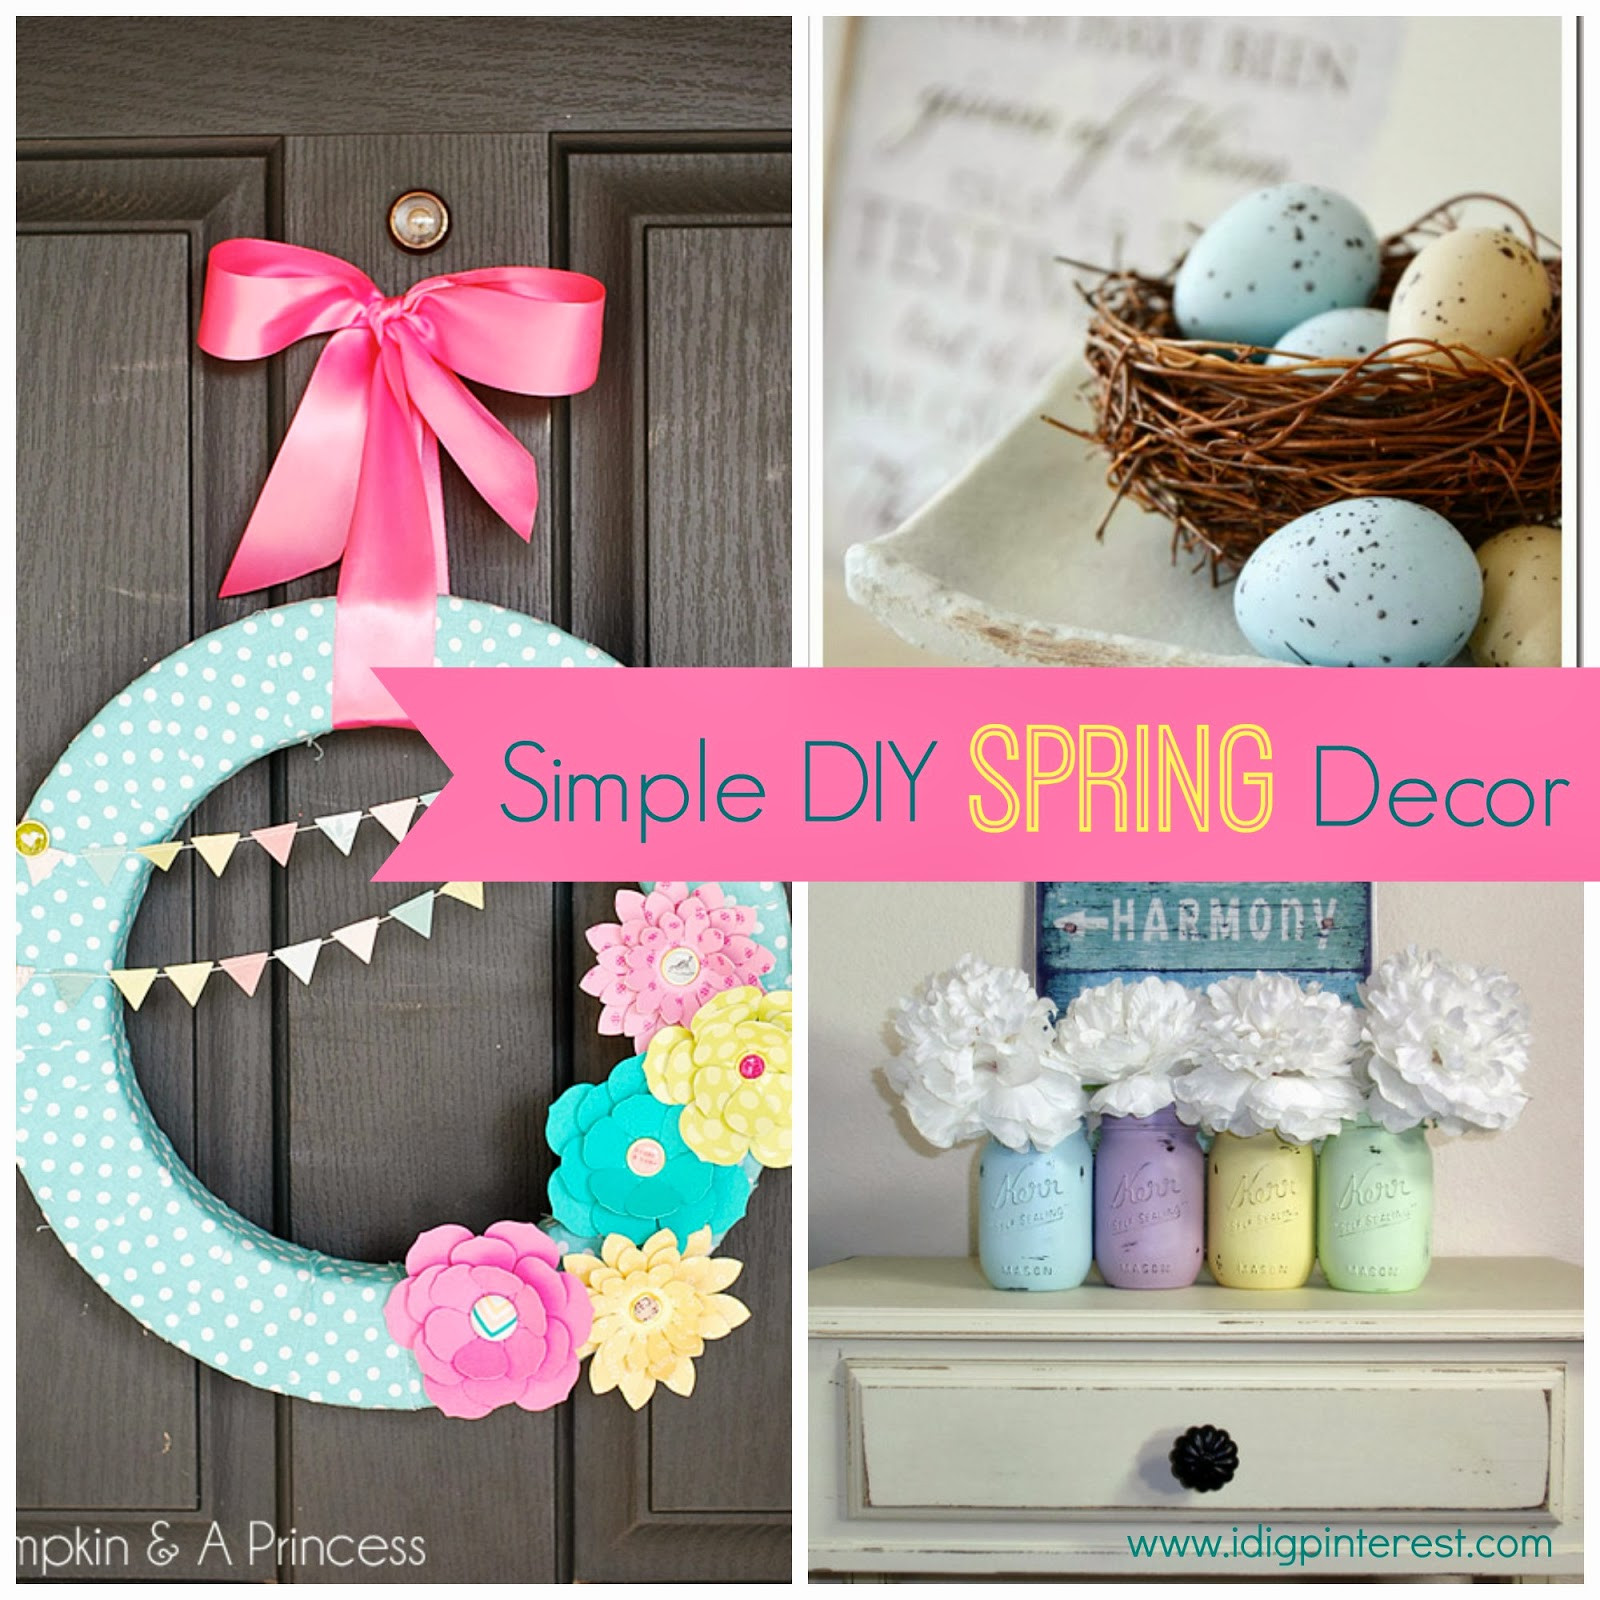 DIY Bedroom Decorations Pinterest
 Simple DIY Spring Decor Ideas I Dig Pinterest